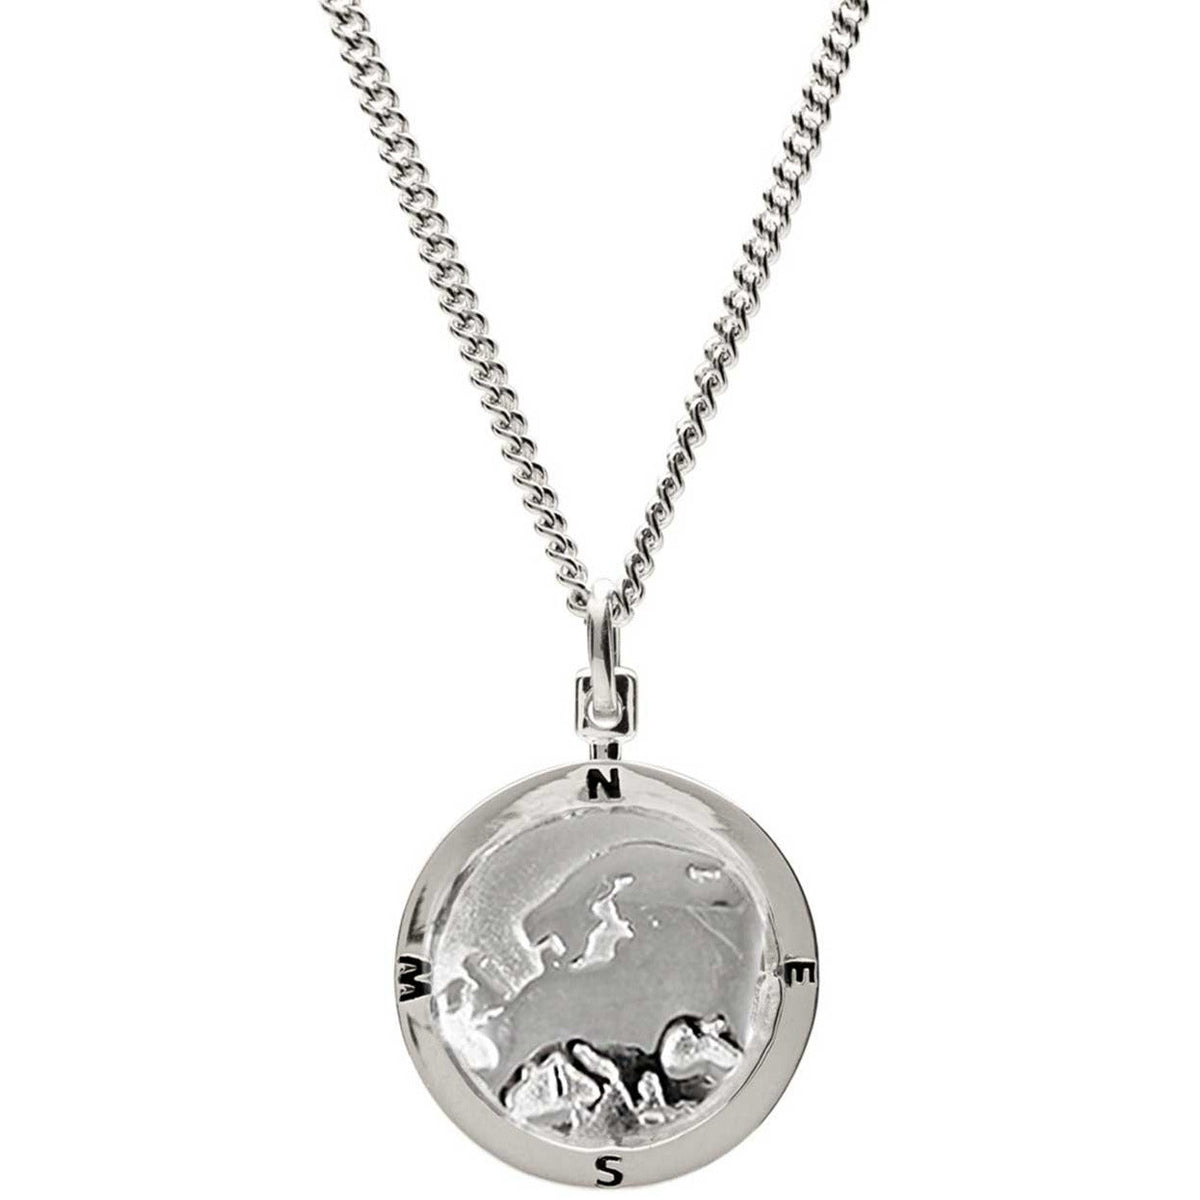 Silver european map globe necklace Off The Map Jewellery alternative Saint Christopher